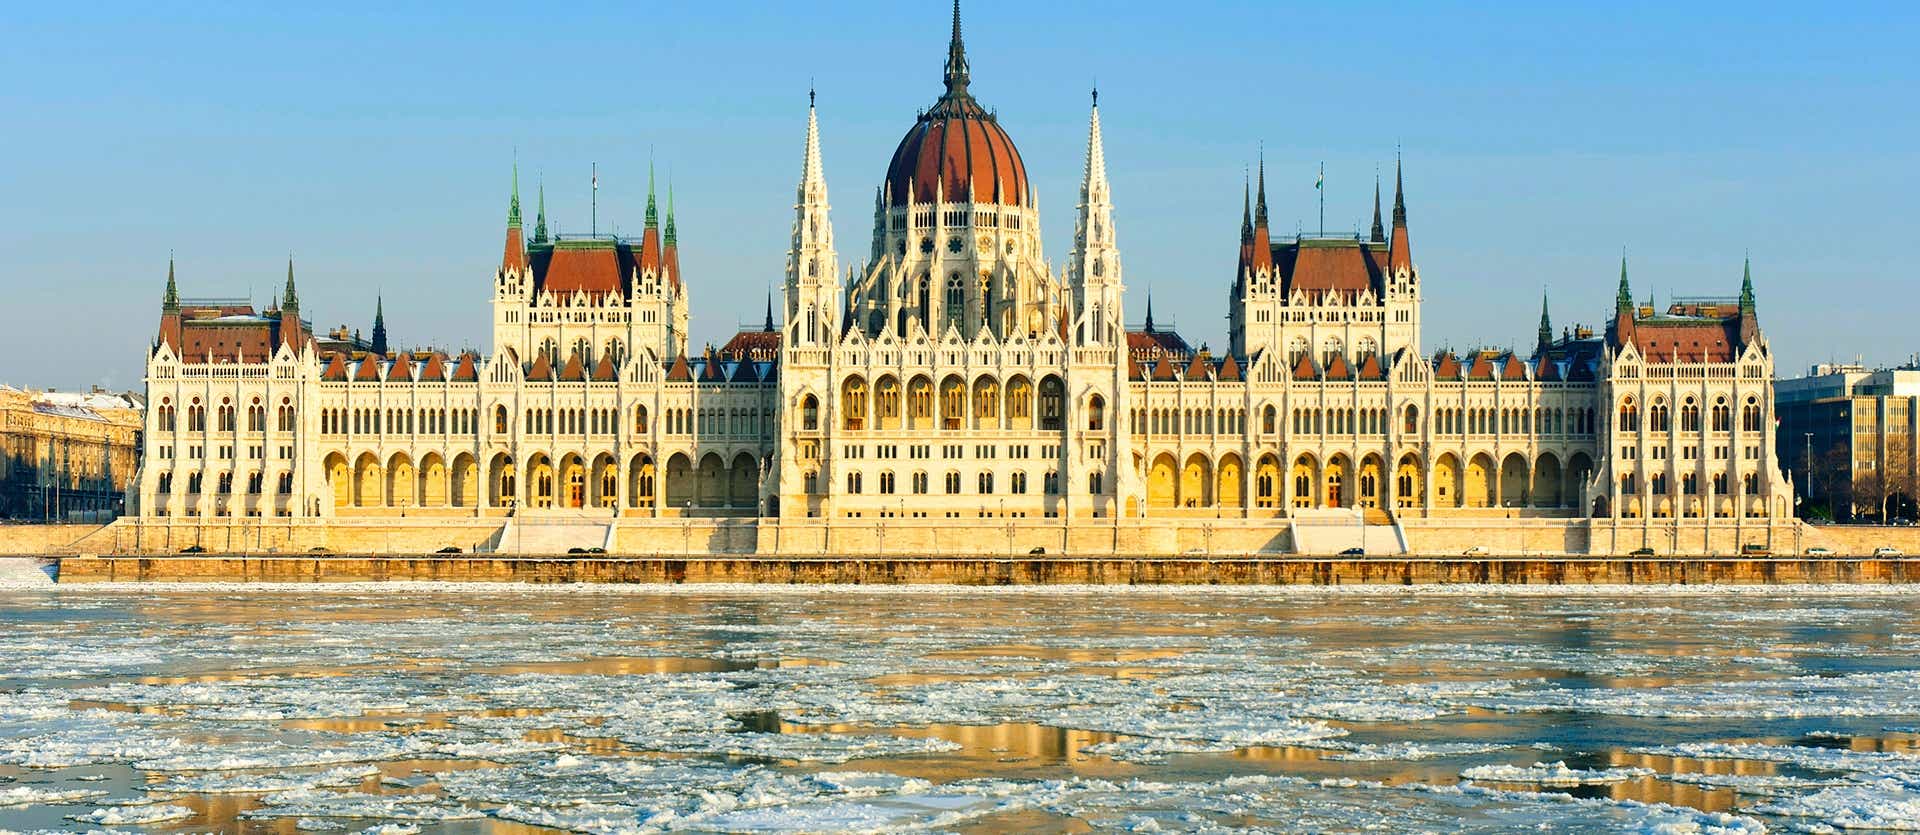 Edificio del Parlamento <span class="iconos separador"></span> Budapest <span class="iconos separador"></span> 